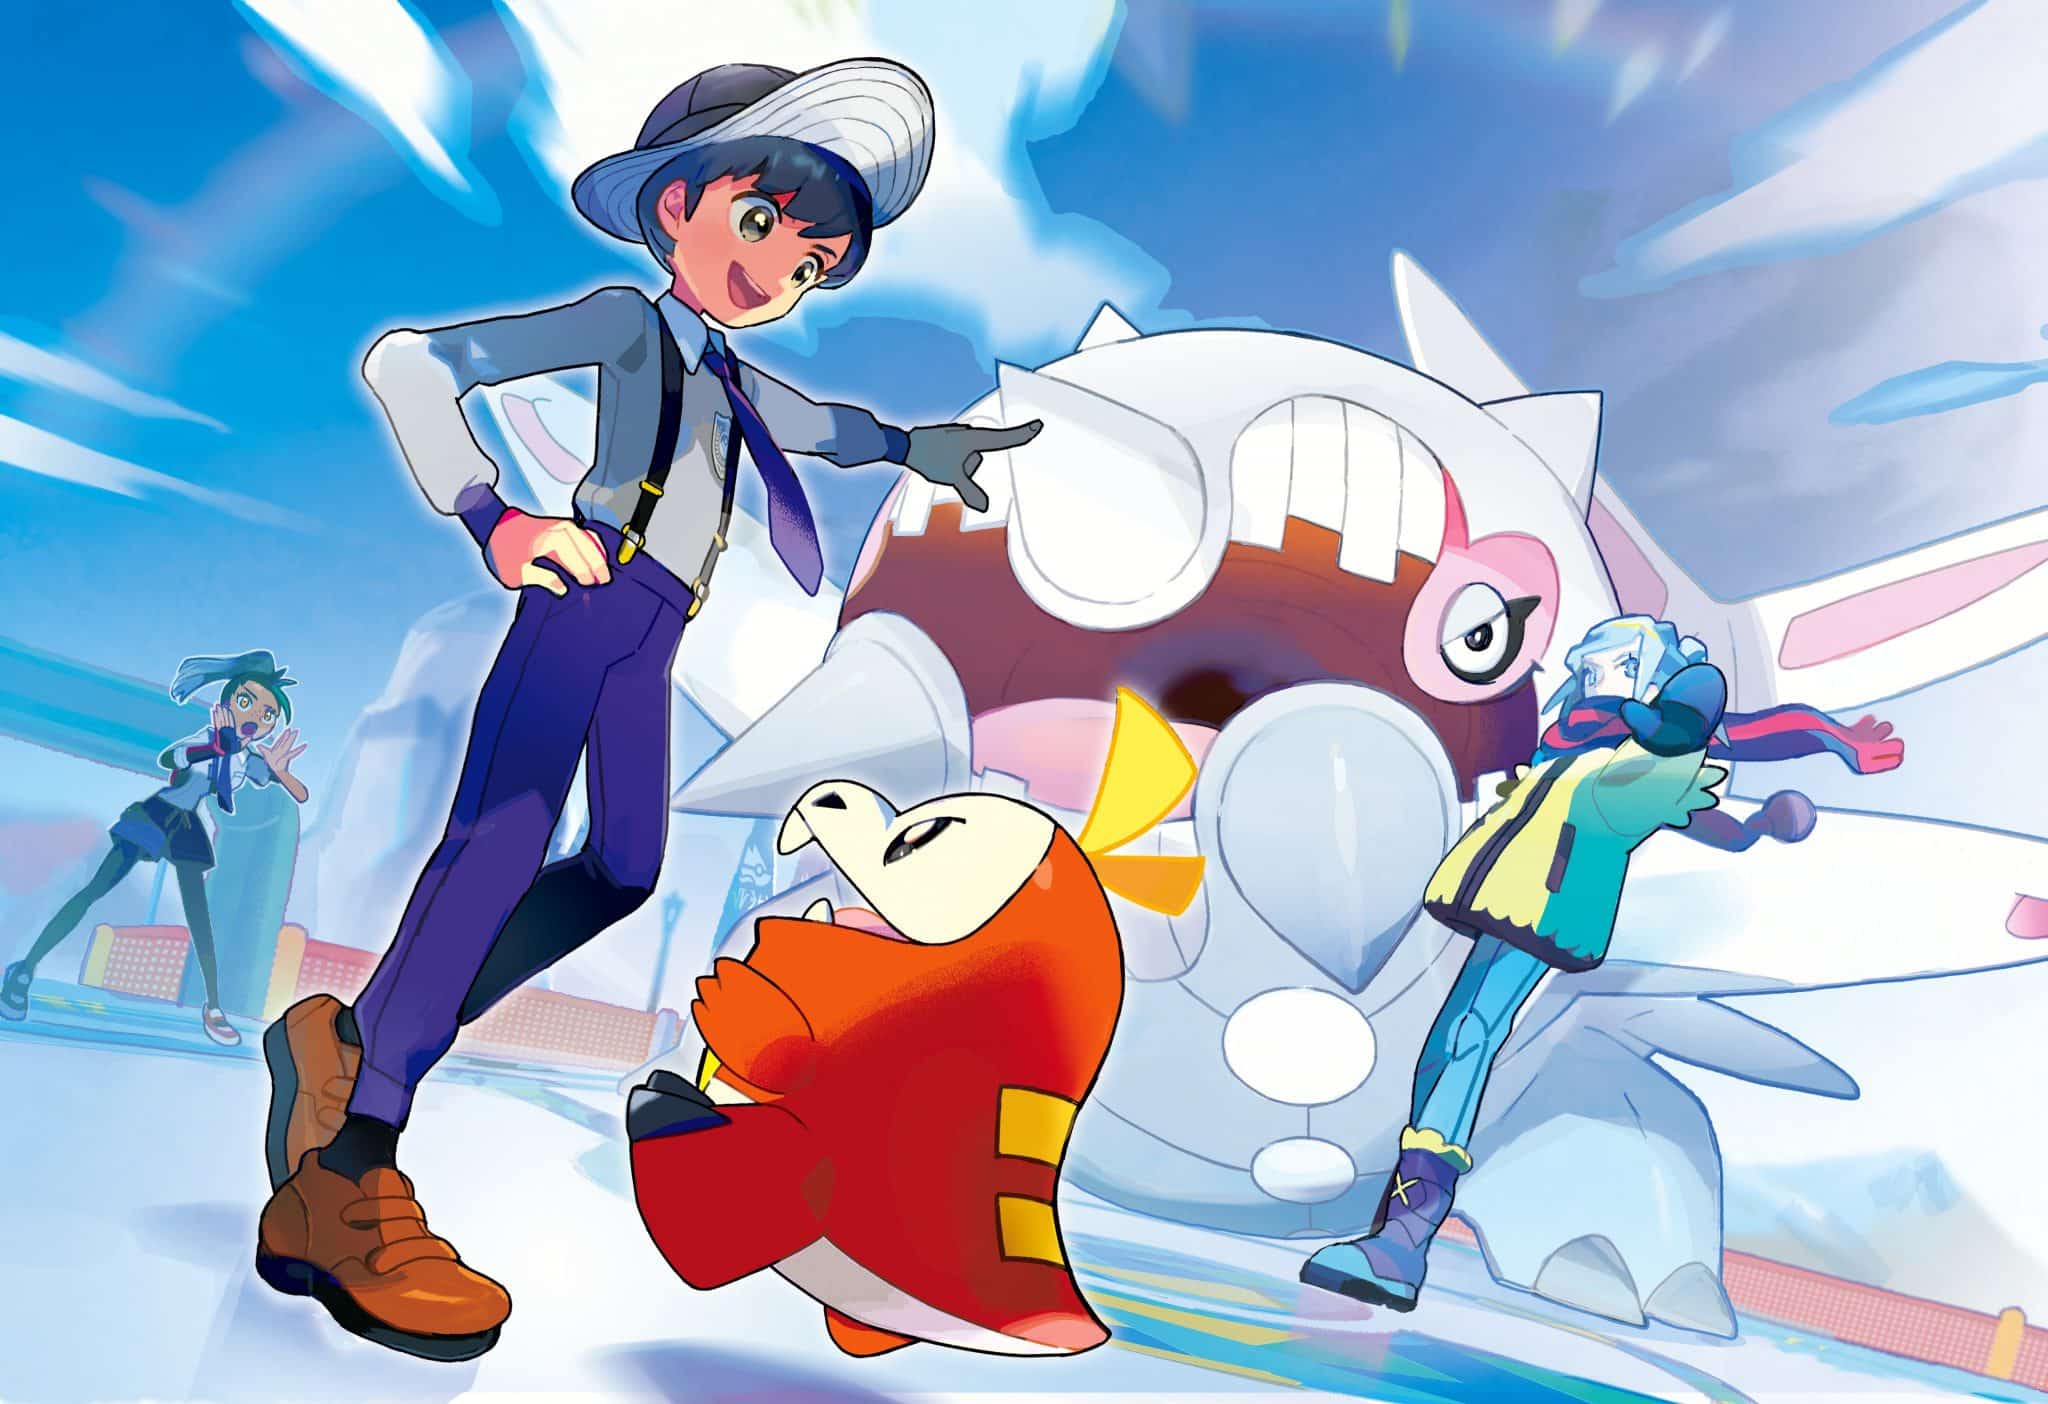 New Pokémon Scarlet & Violet Trailer Highlights 3 Stories, New Characters & Pokémon